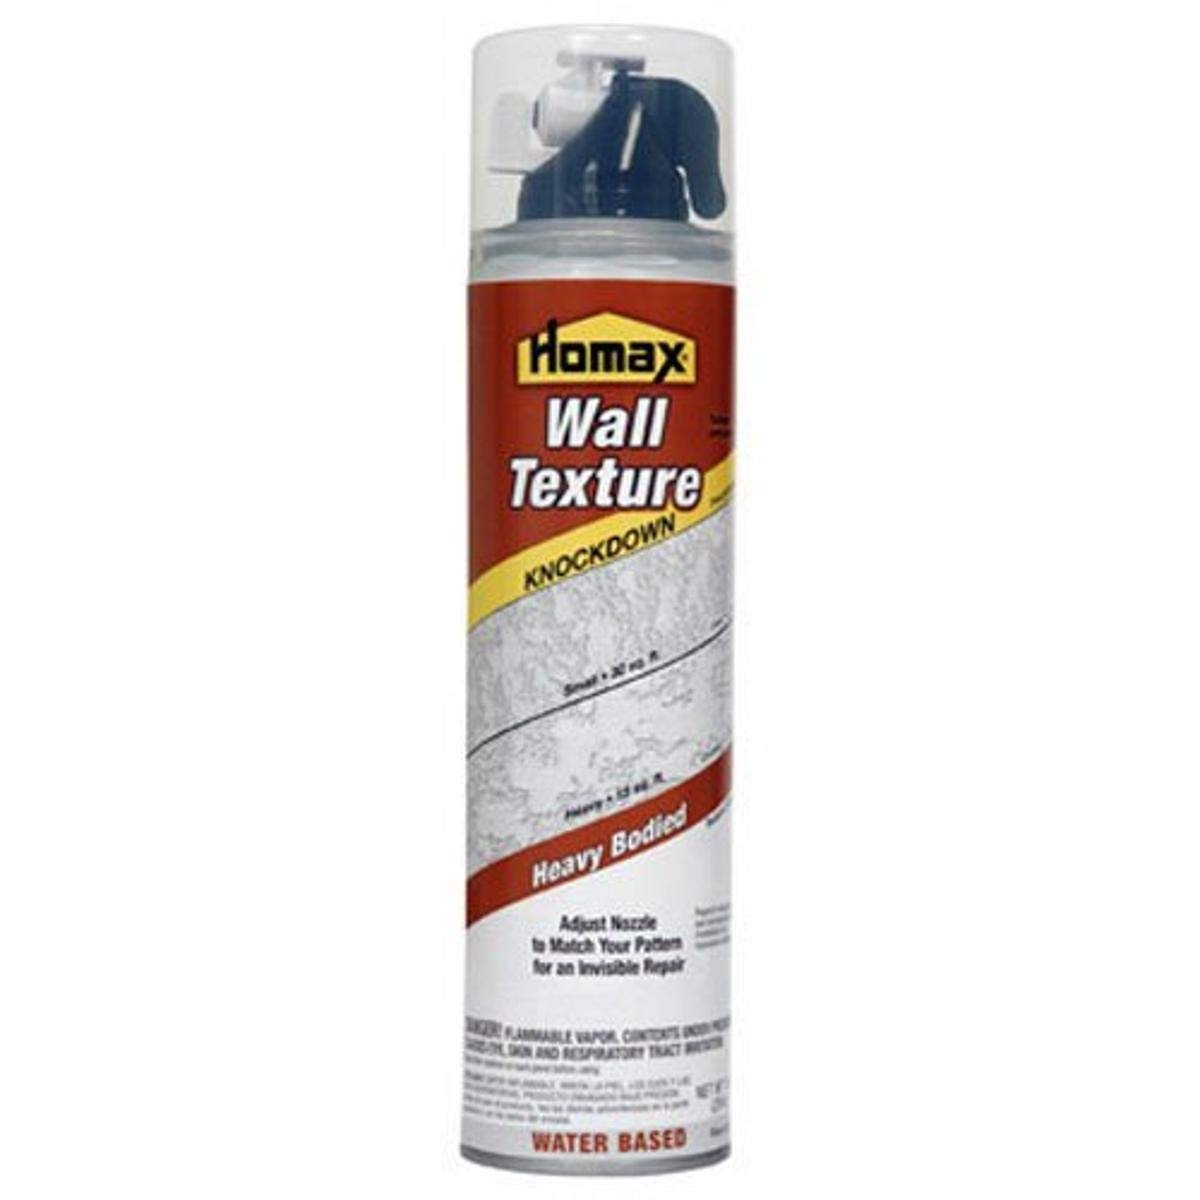 Homax 4060 Aerosol Wall Texture Water Based - Knockdown 10oz